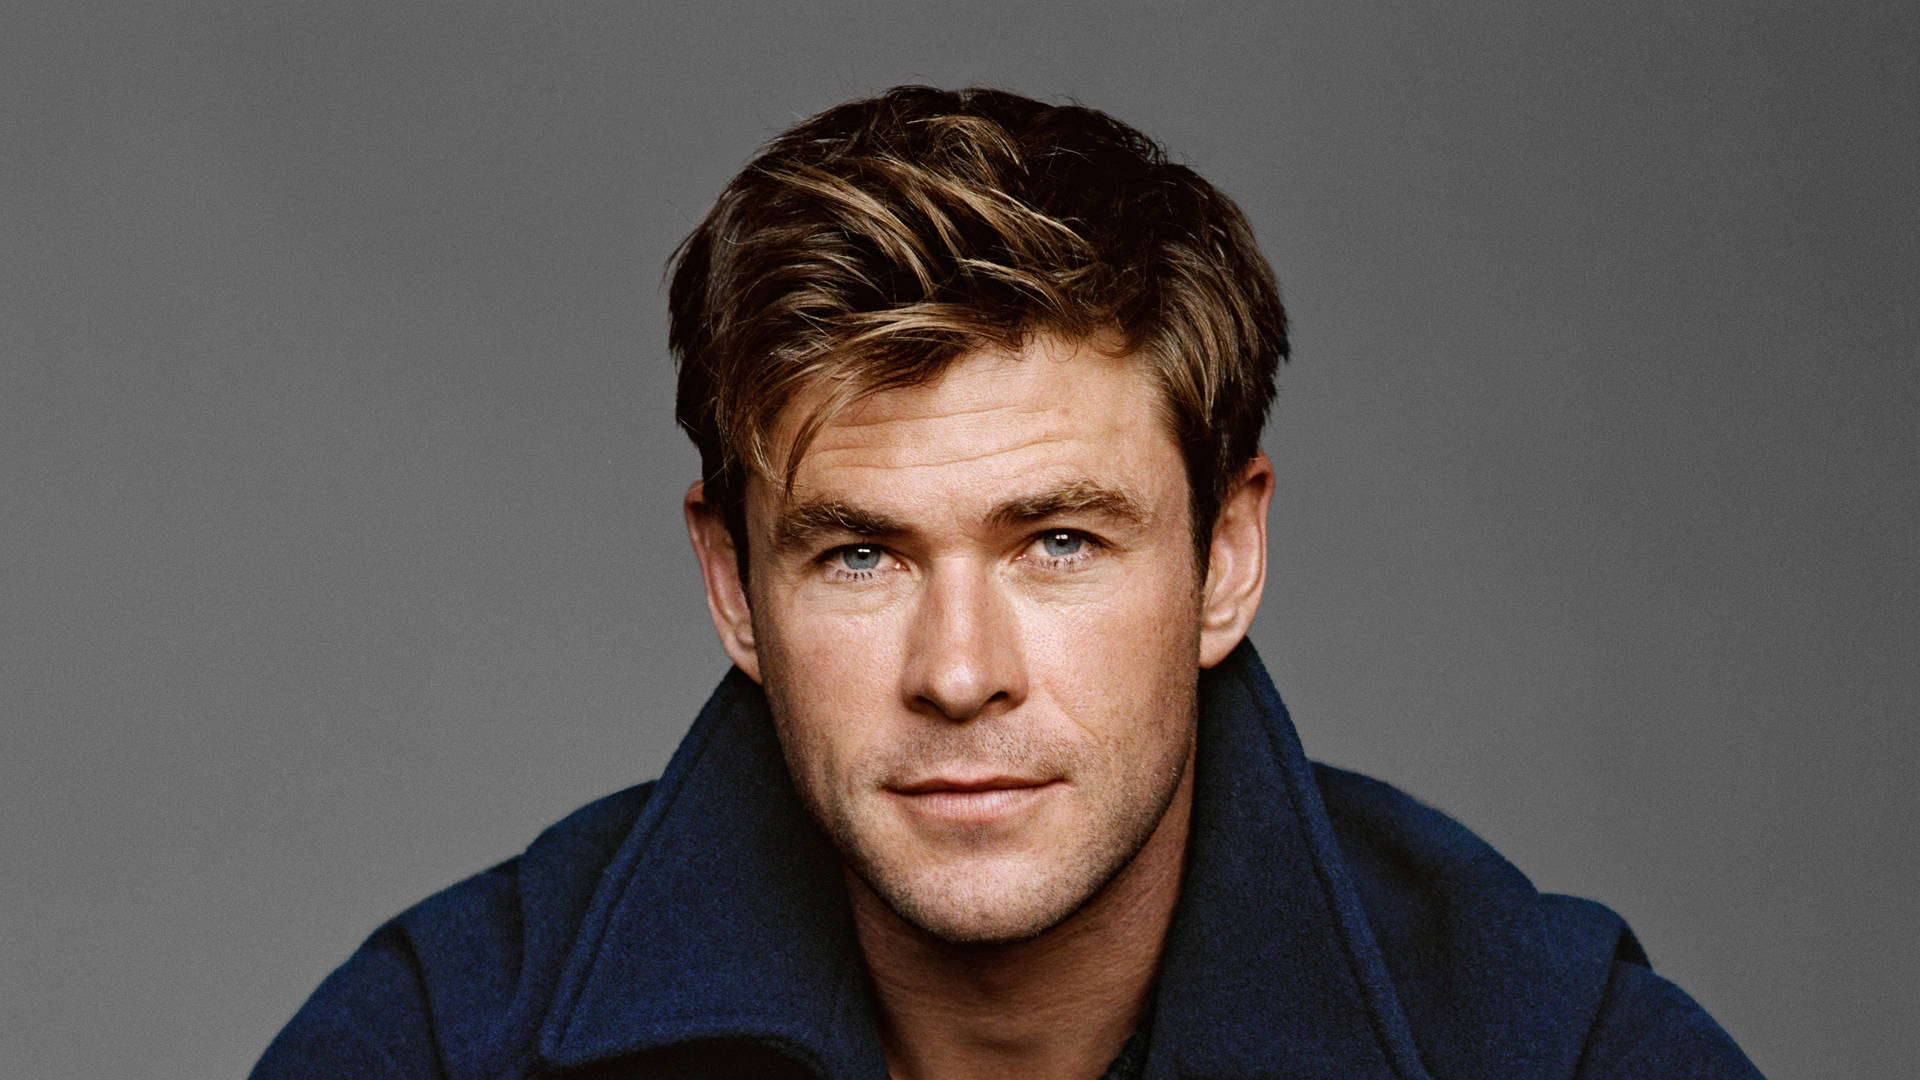 Chris Hemsworth In Blue Jacket Wallpaper